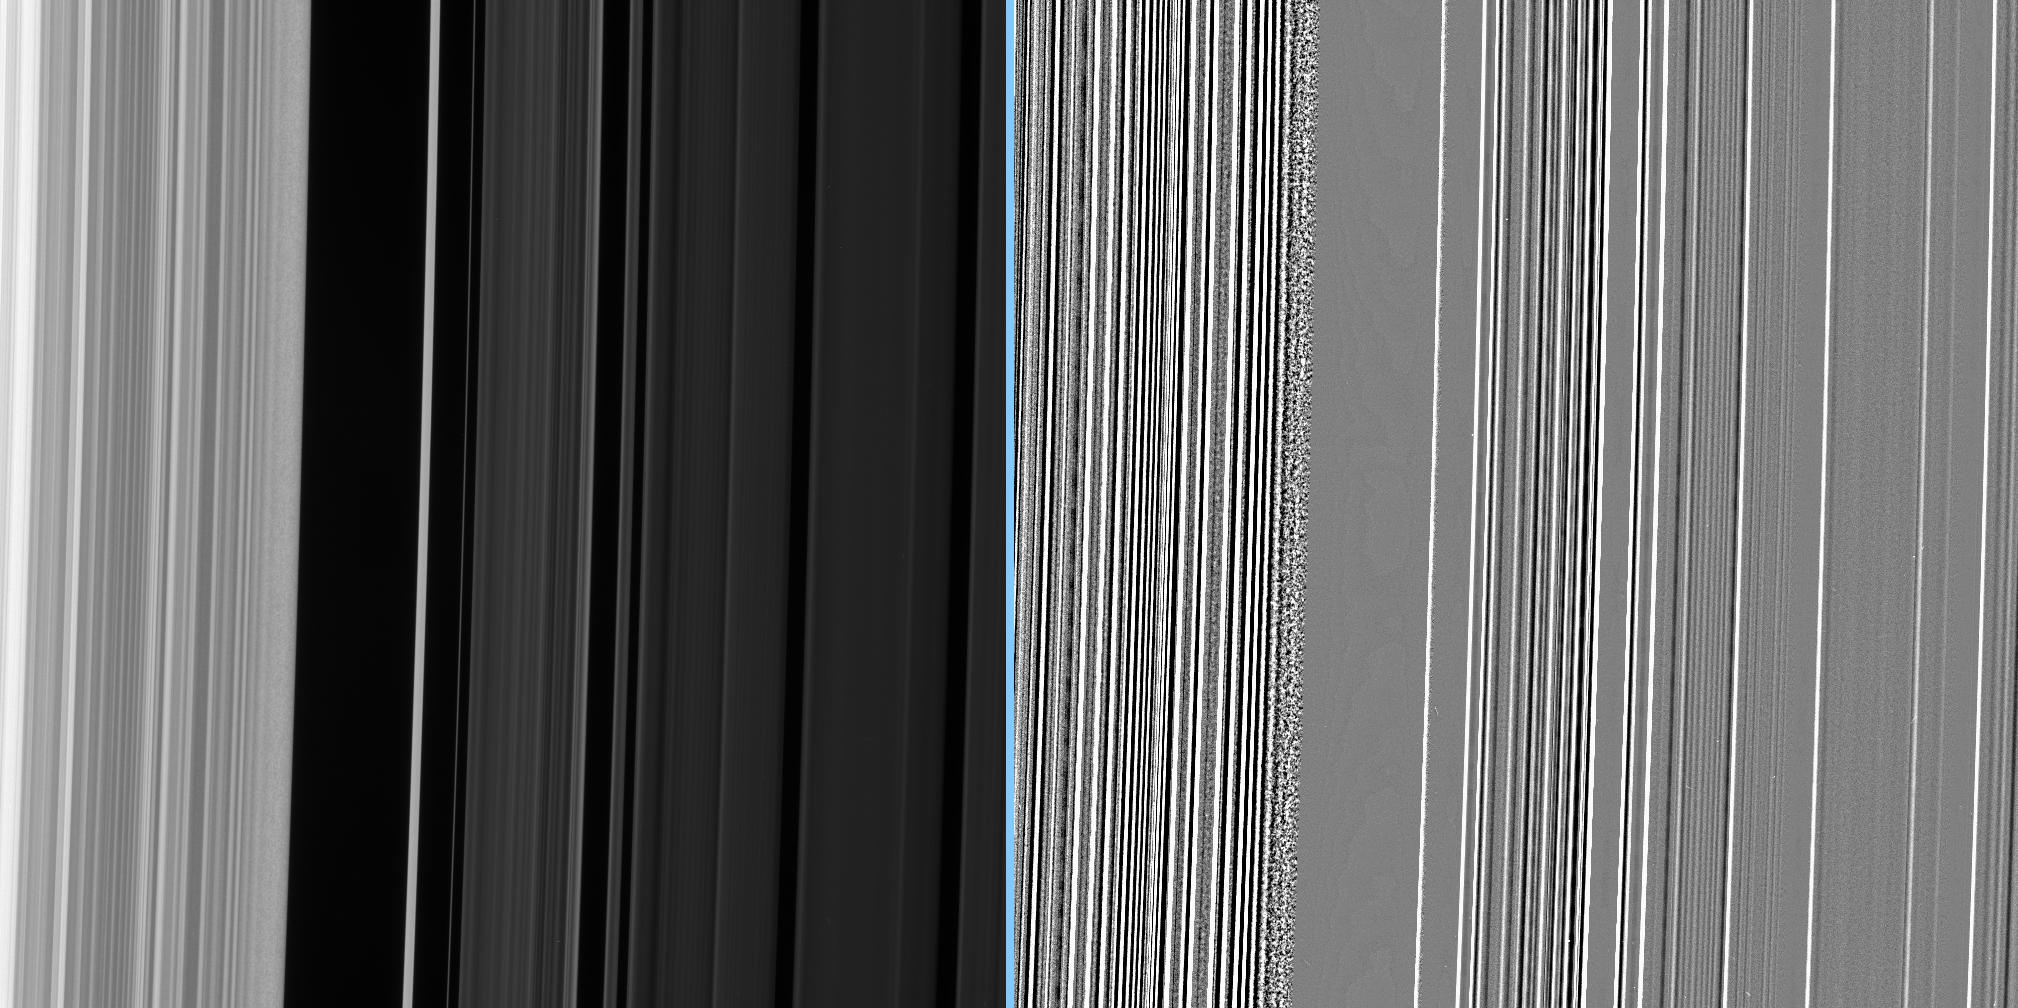 Inner edge of the Cassini Division in Saturn's rings